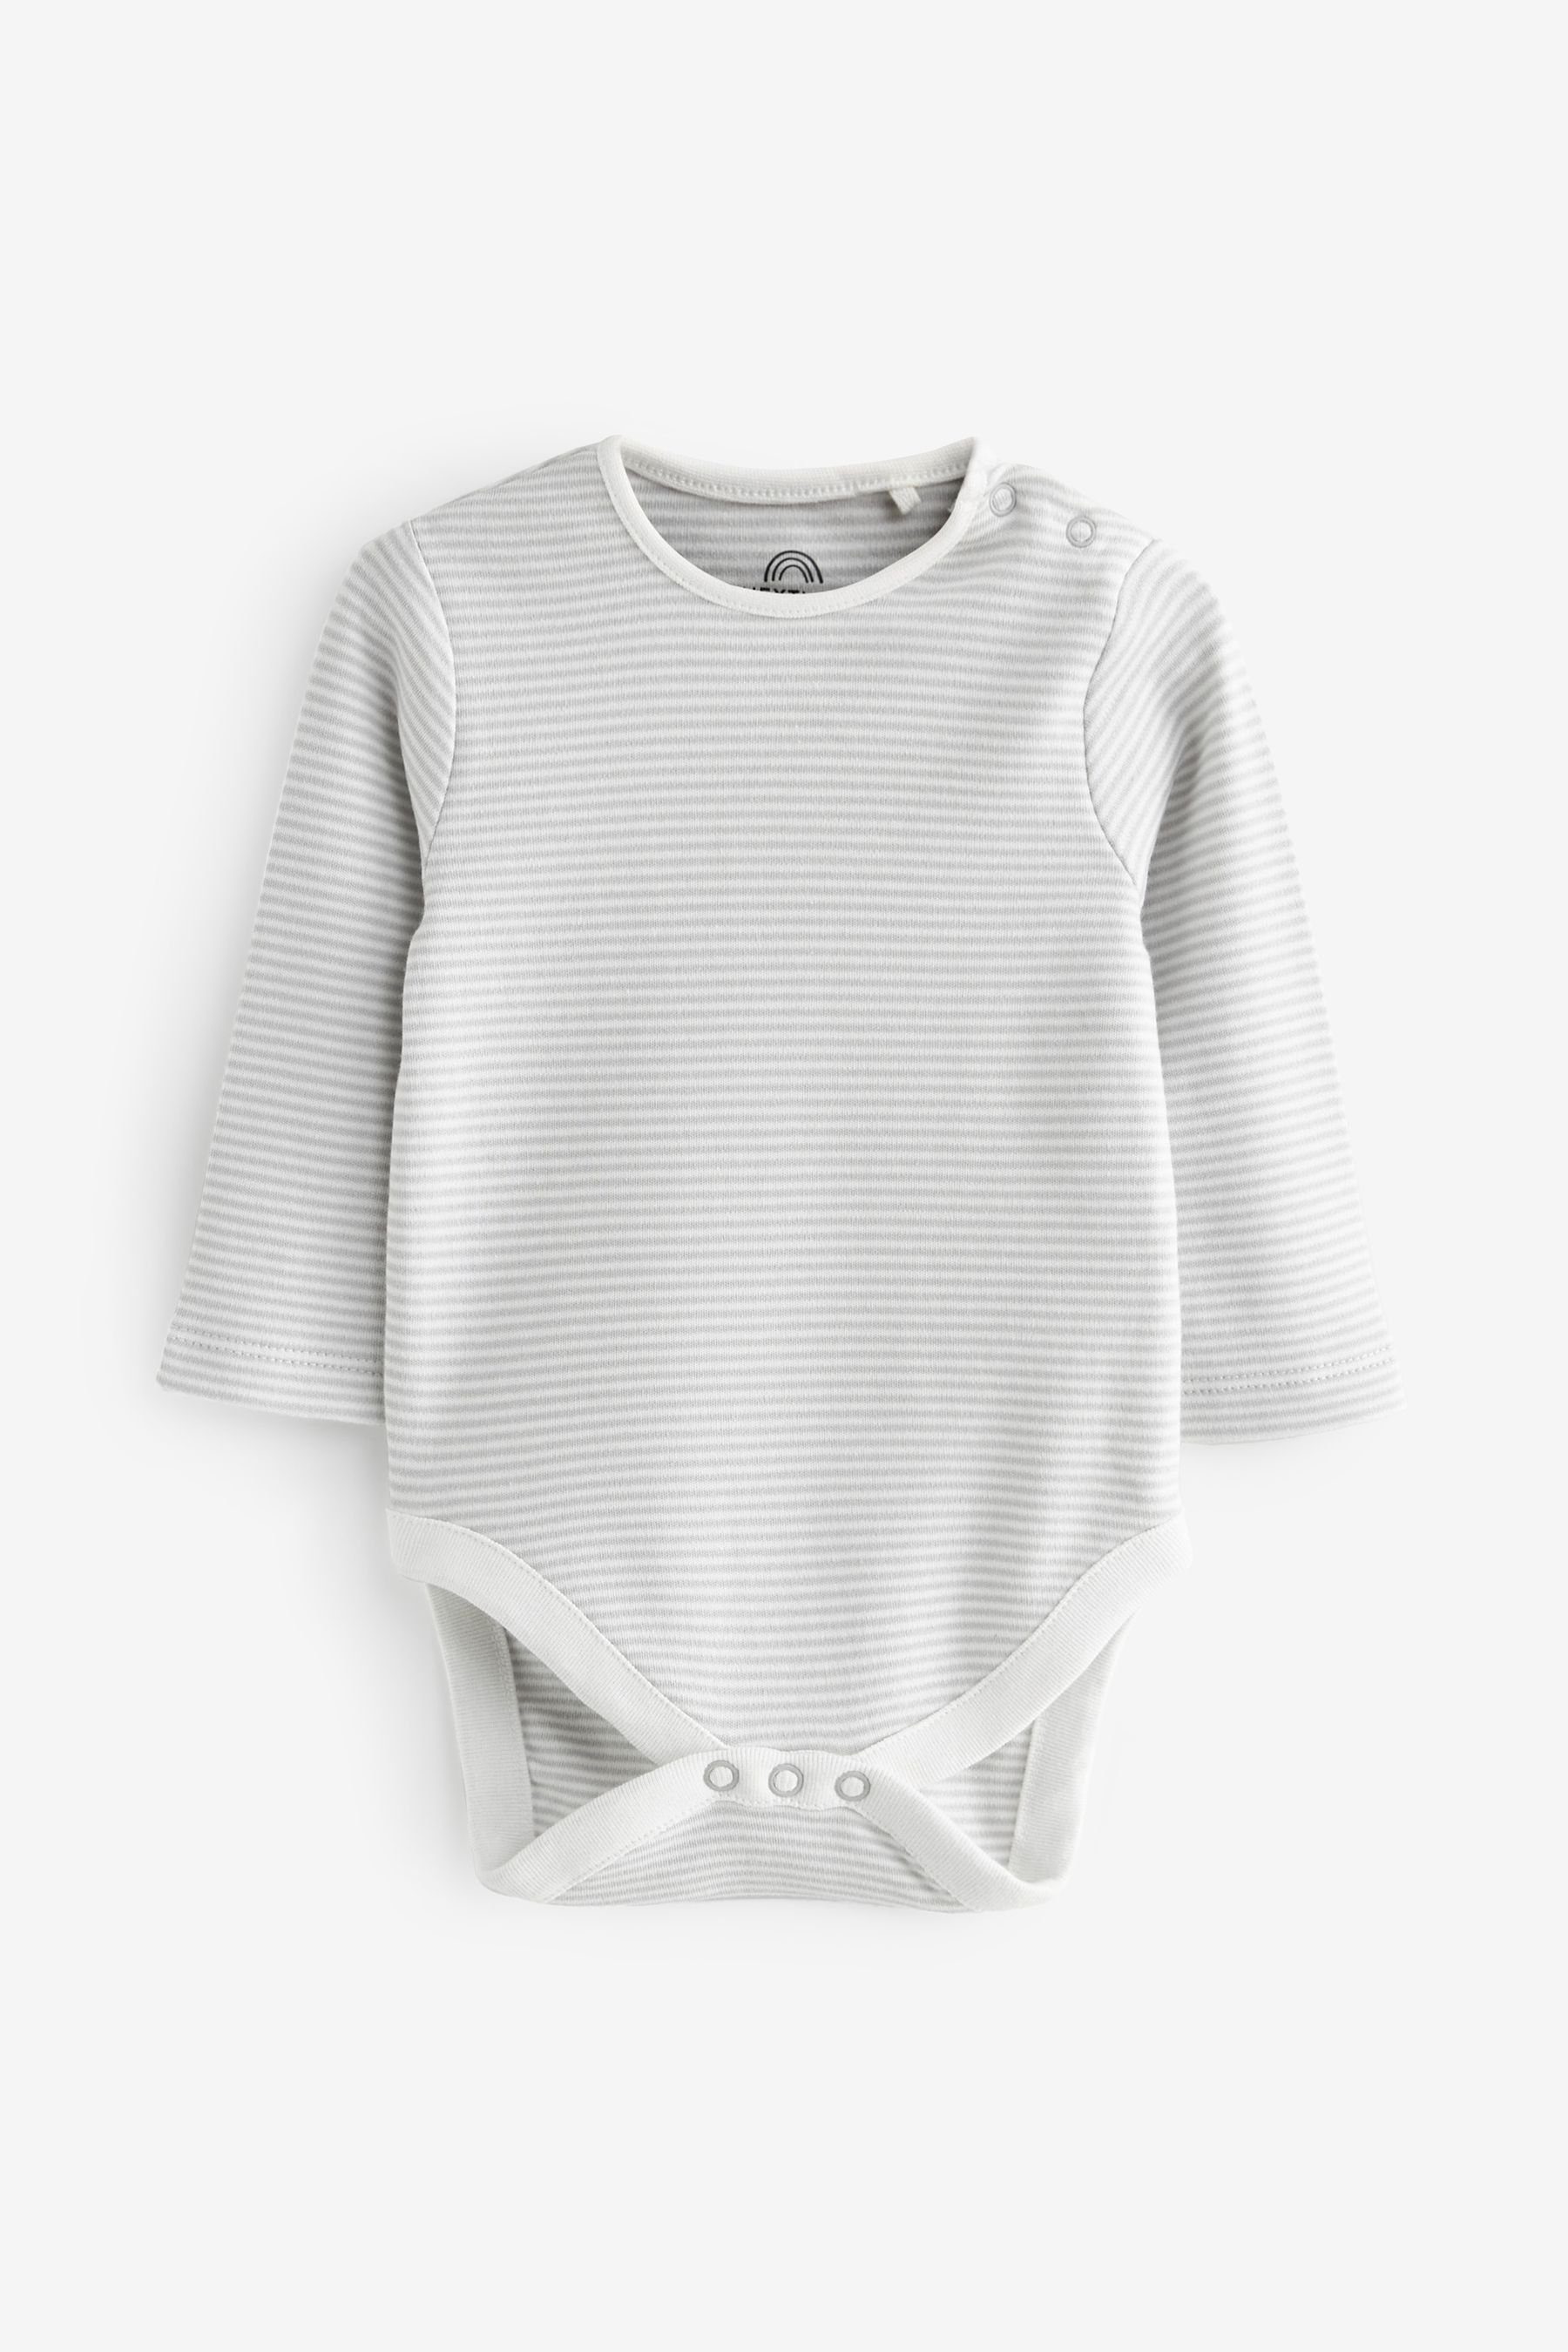 Next Shirt & Hose Baby-Strickstrampler, Oberteil & Strumpfhose Set (3-tlg) Grey Star